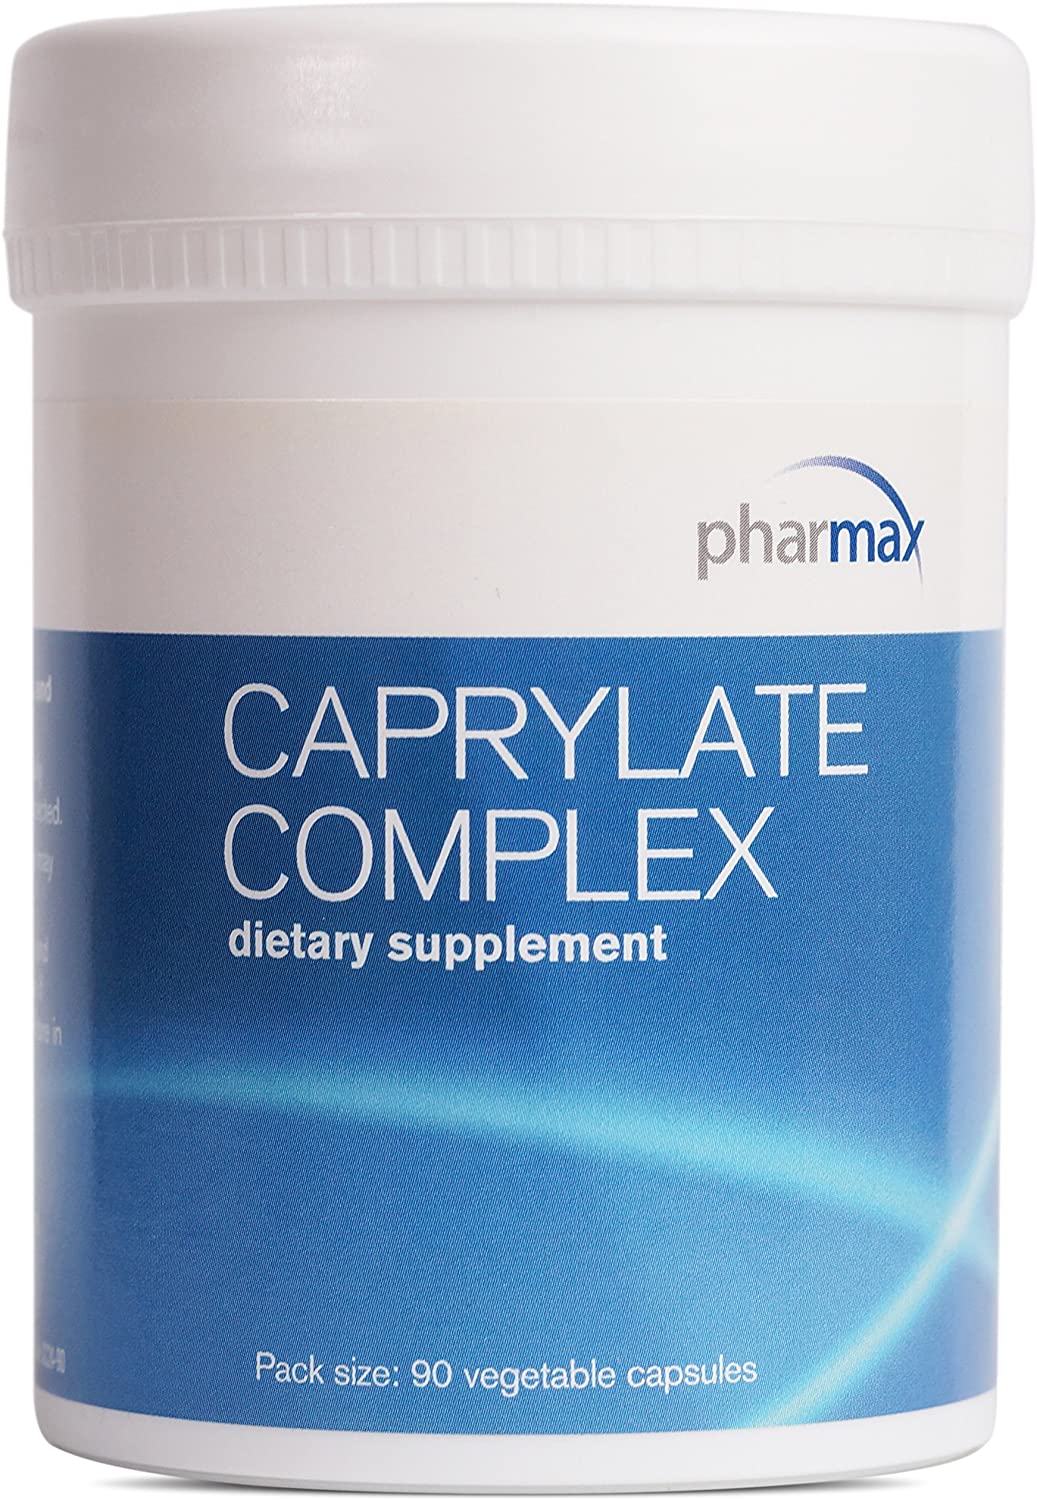 CaprylateComplex